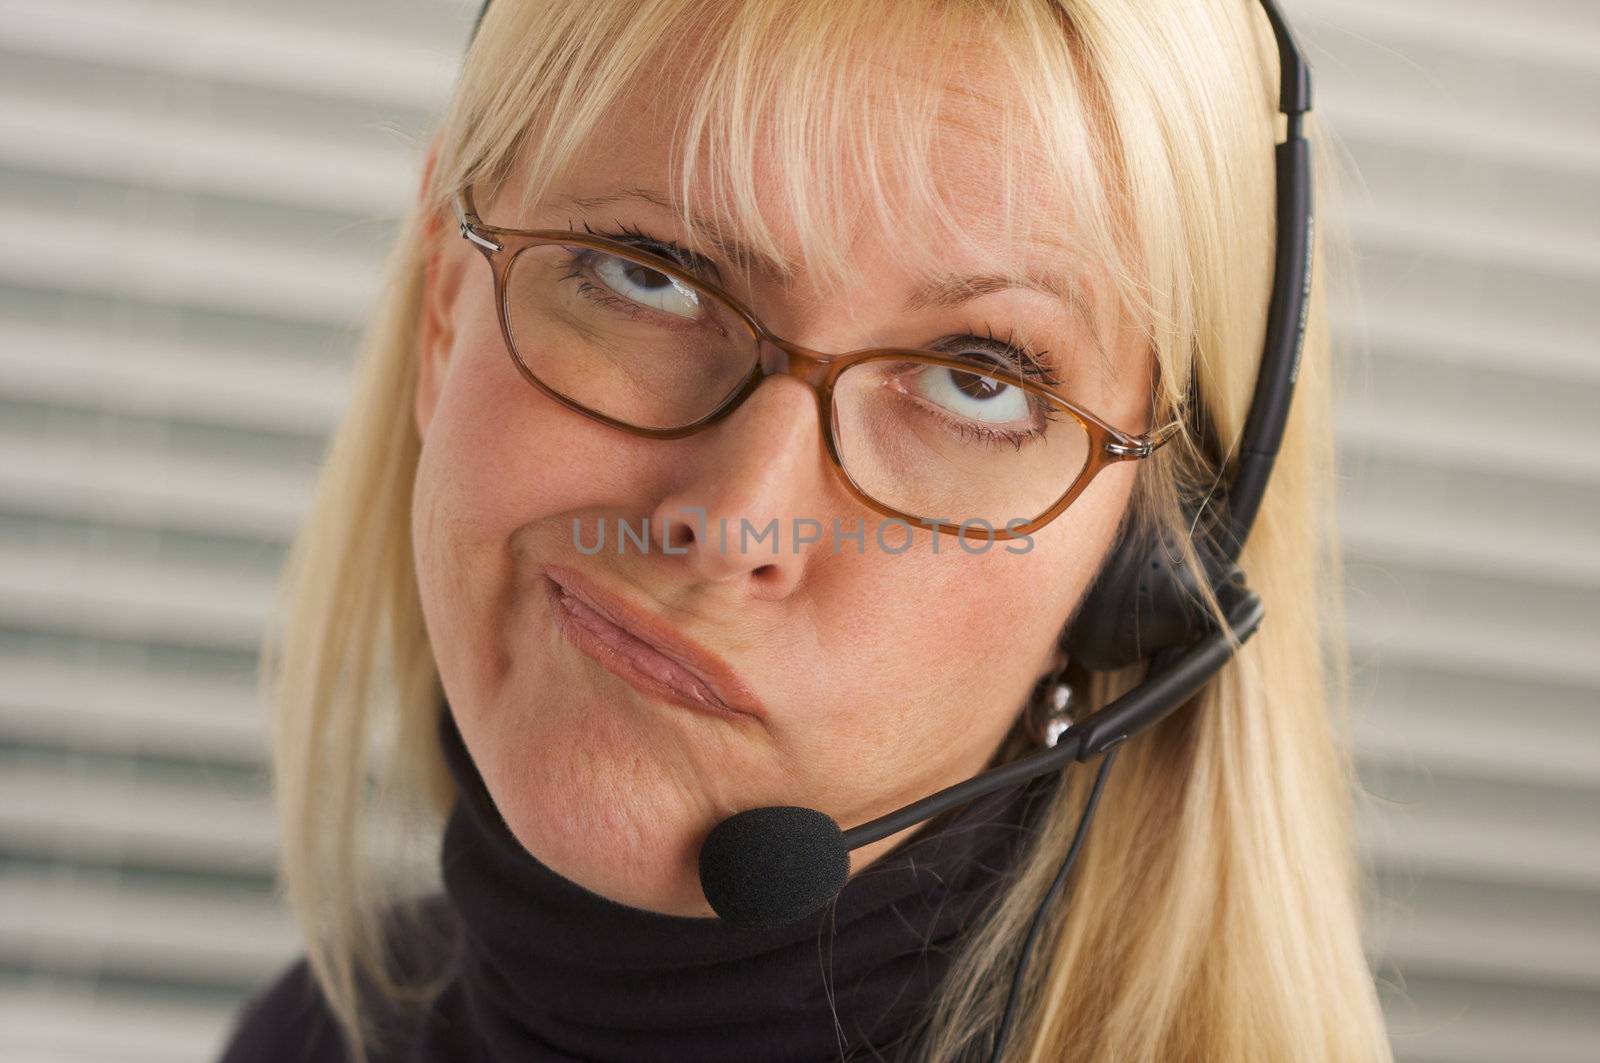 Goofy businesswoman talks on her phone headset.